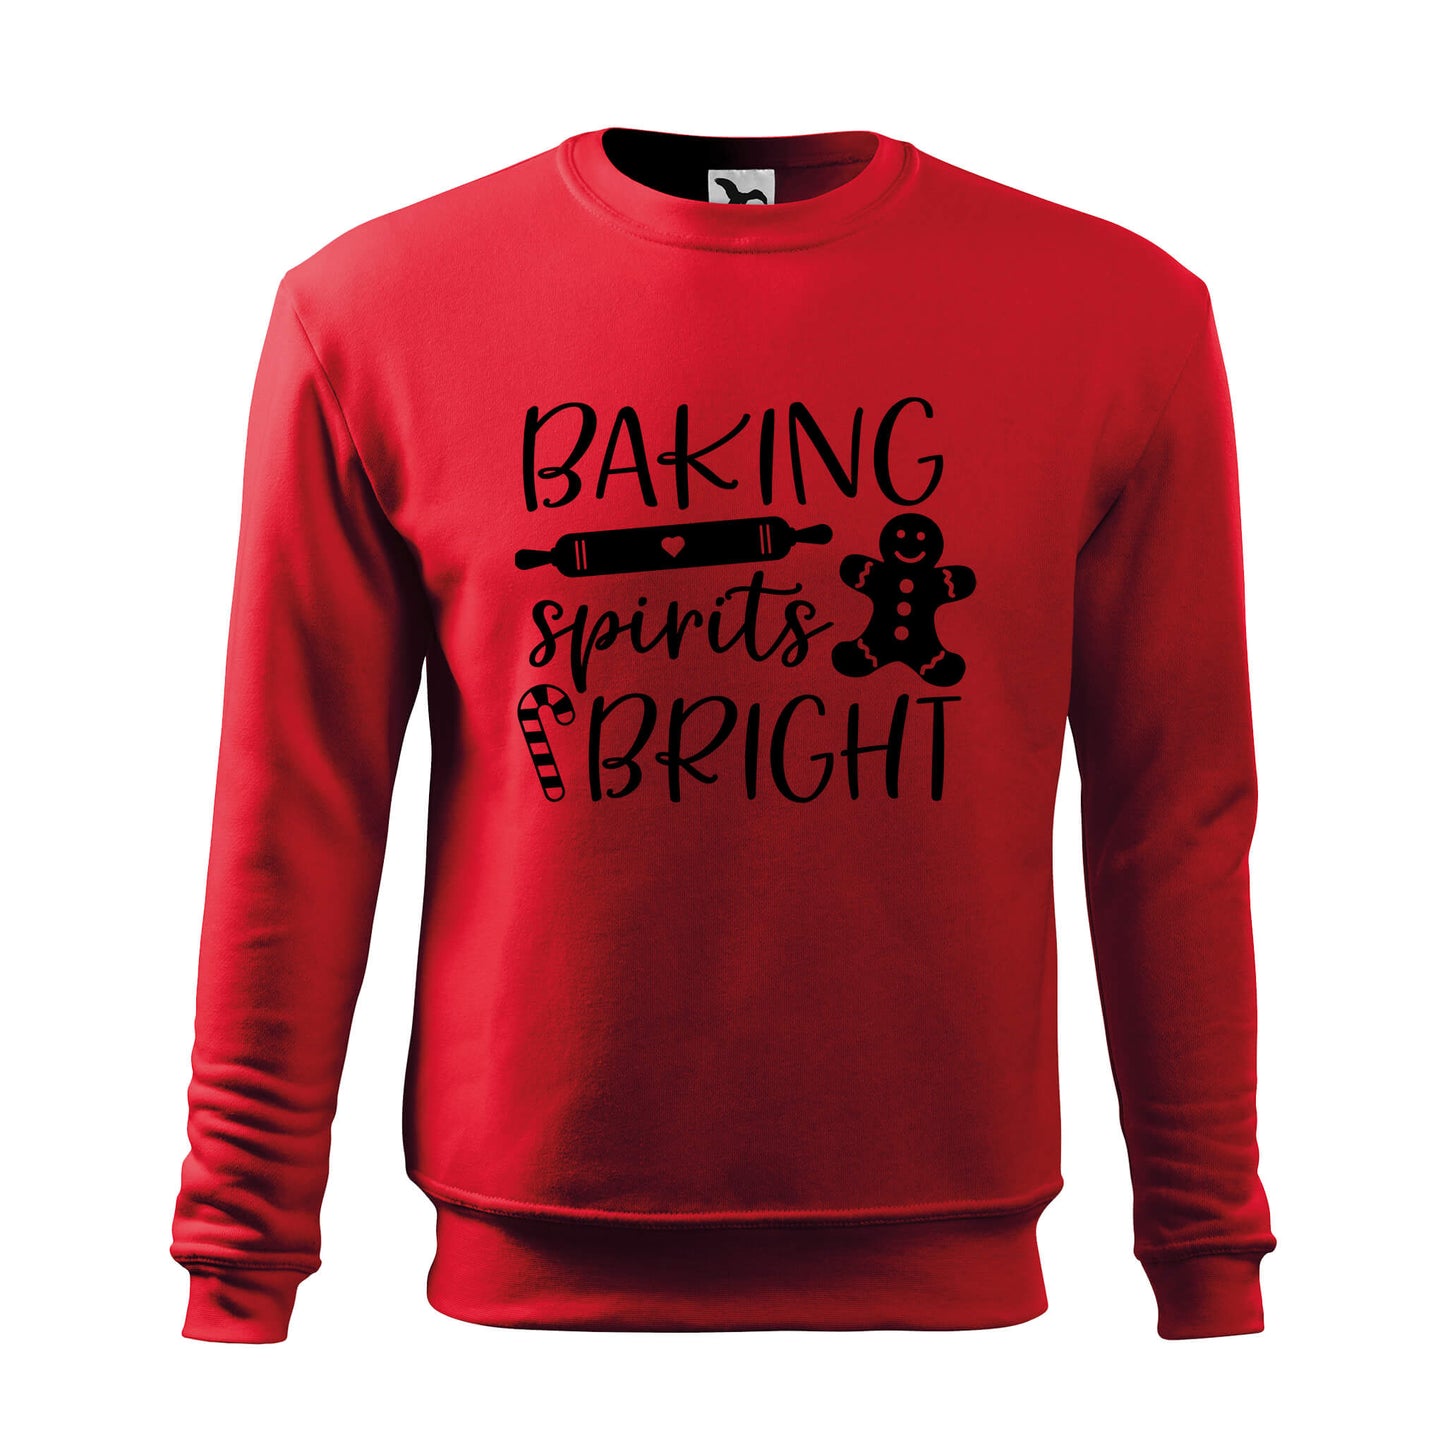 Baking spirits bright sweatshirt - rvdesignprint